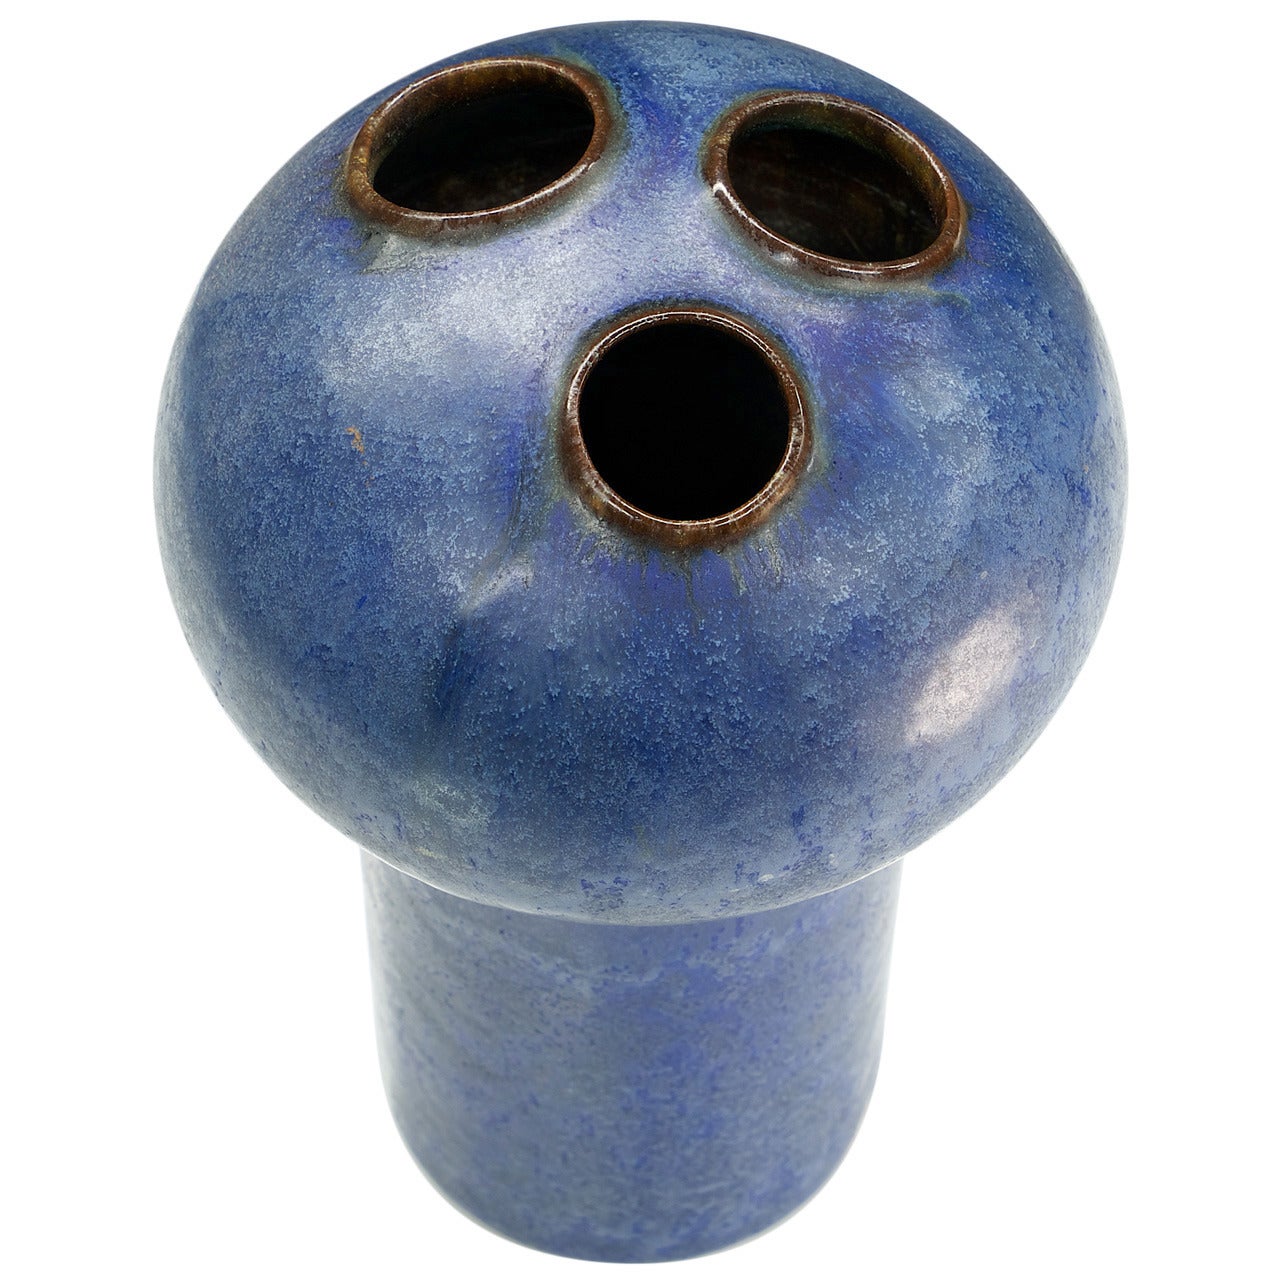 Knabstrup Ceramic Moon Frog Bud Vase Vintage Mid-Century Modern Studio Pottery